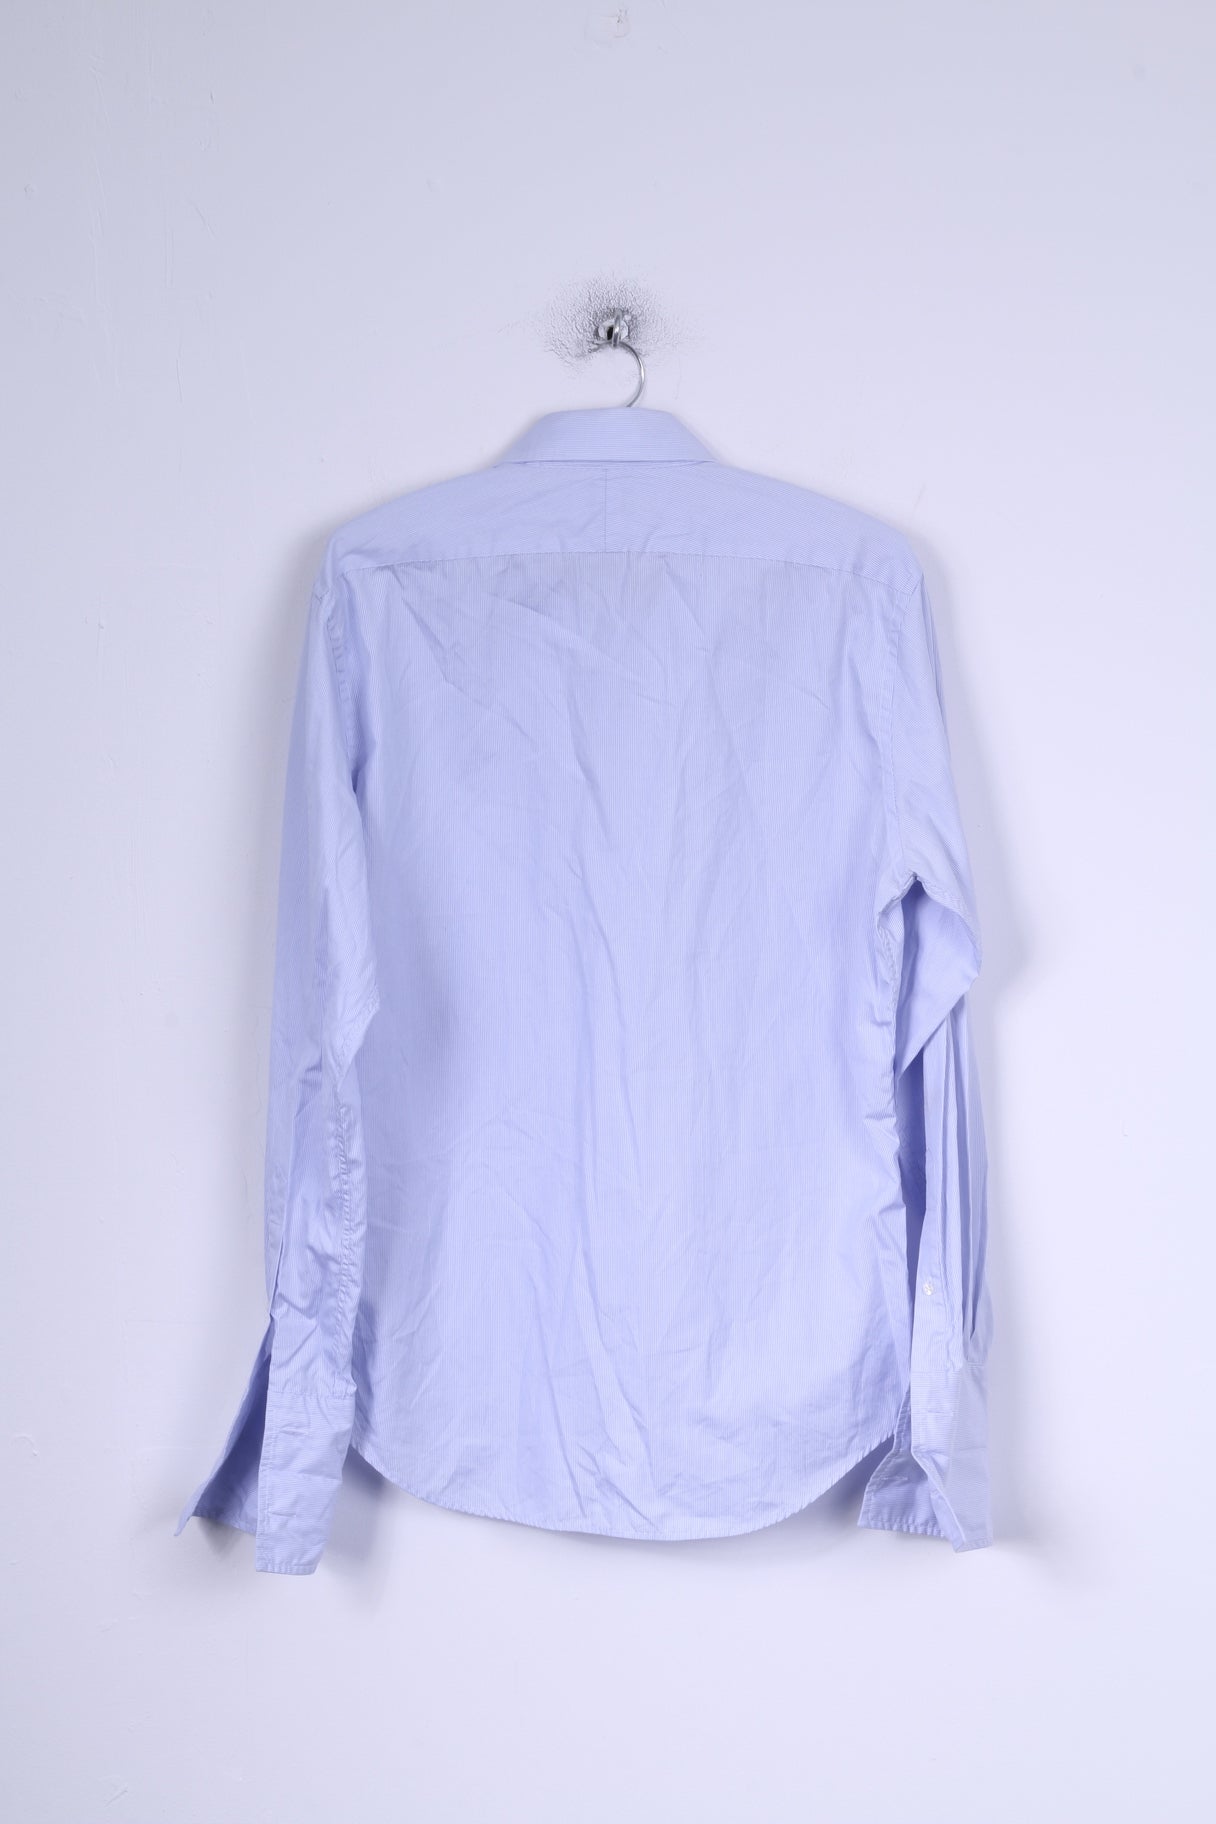 T.M Lewin Mens 16 35 L Casual Shirt Blue Striped Cotton Slim Fit Lewin 100